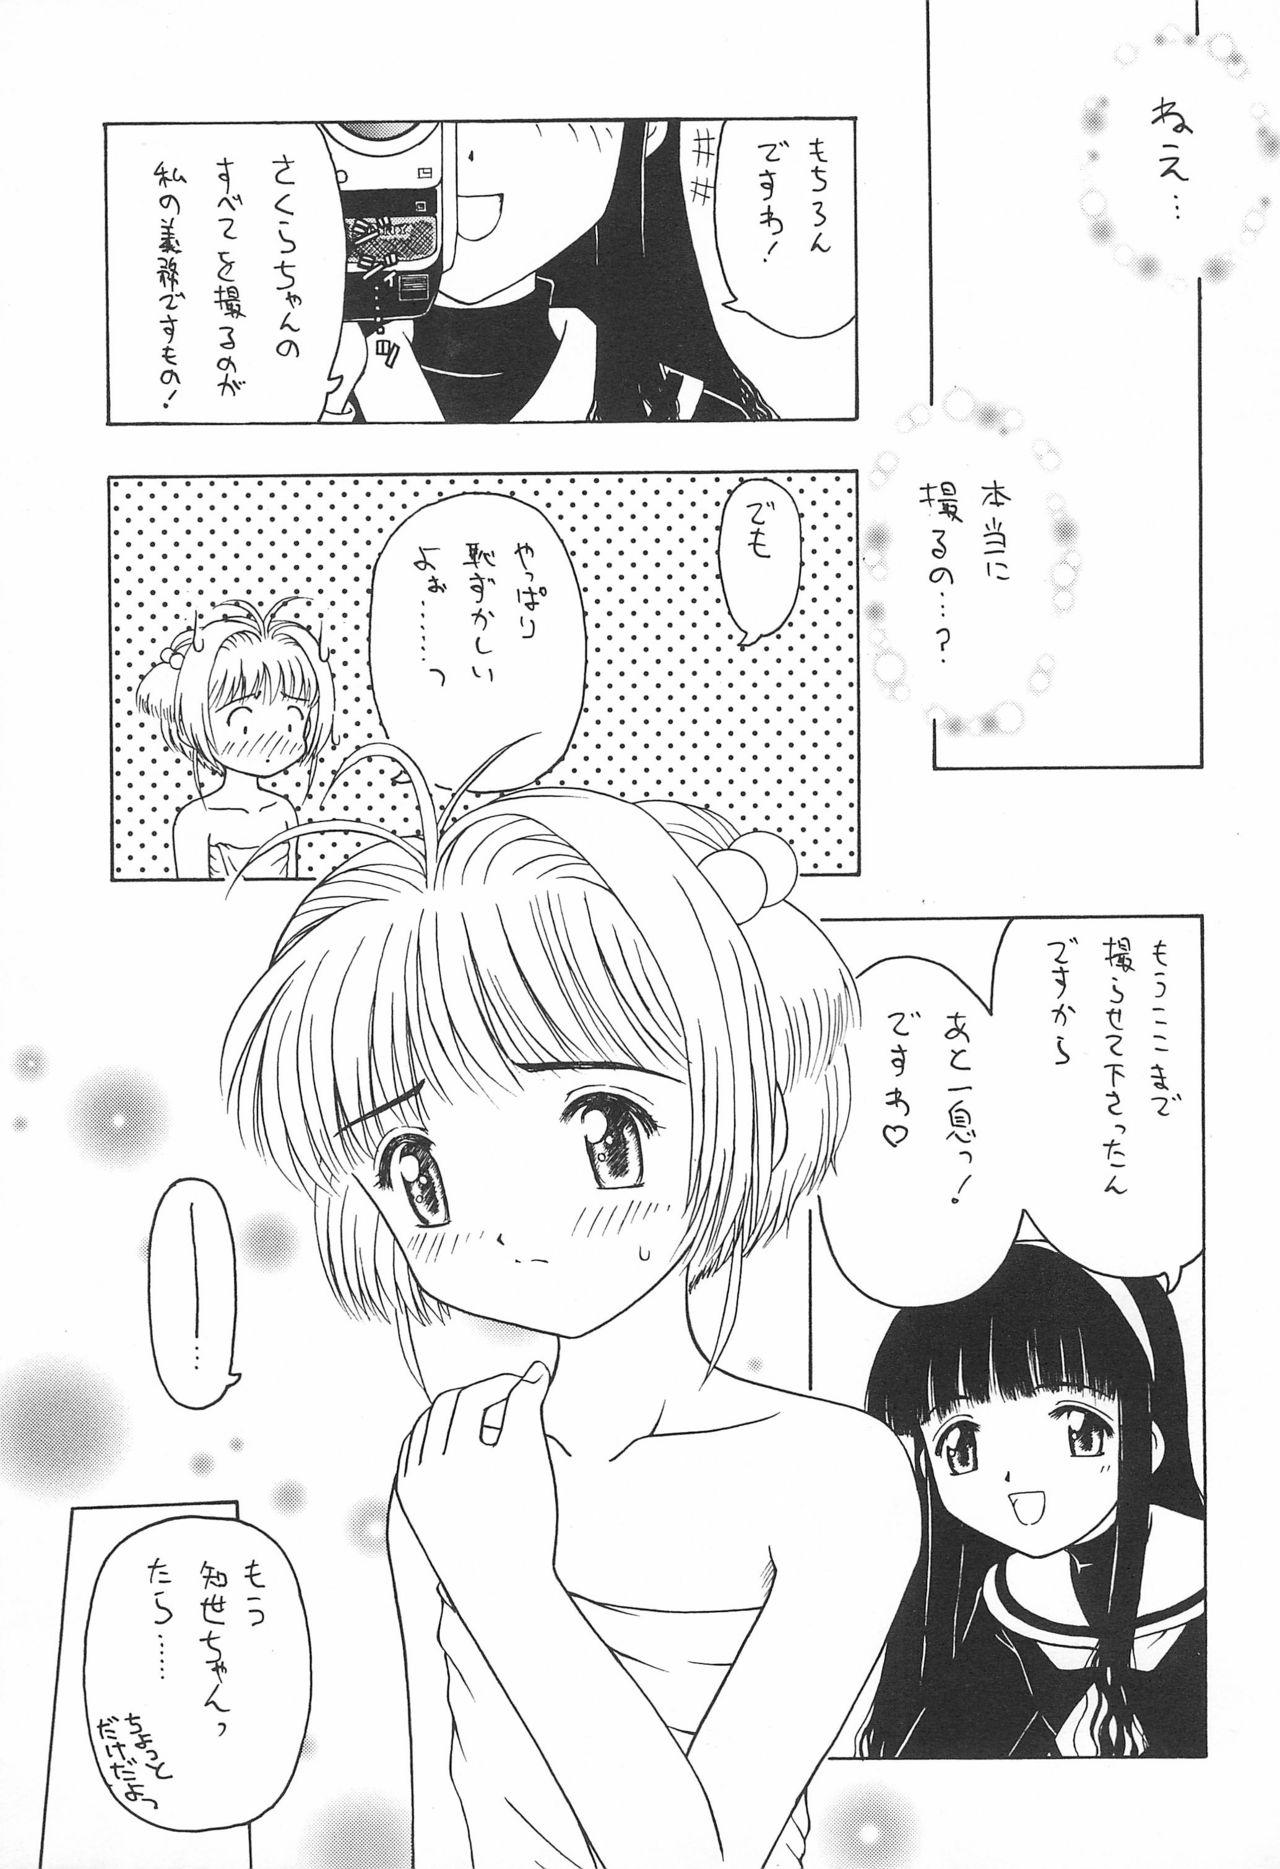 Spy Camera Sakura to Tomoyo INTERCOURSE 1 - Cardcaptor sakura Male - Page 5